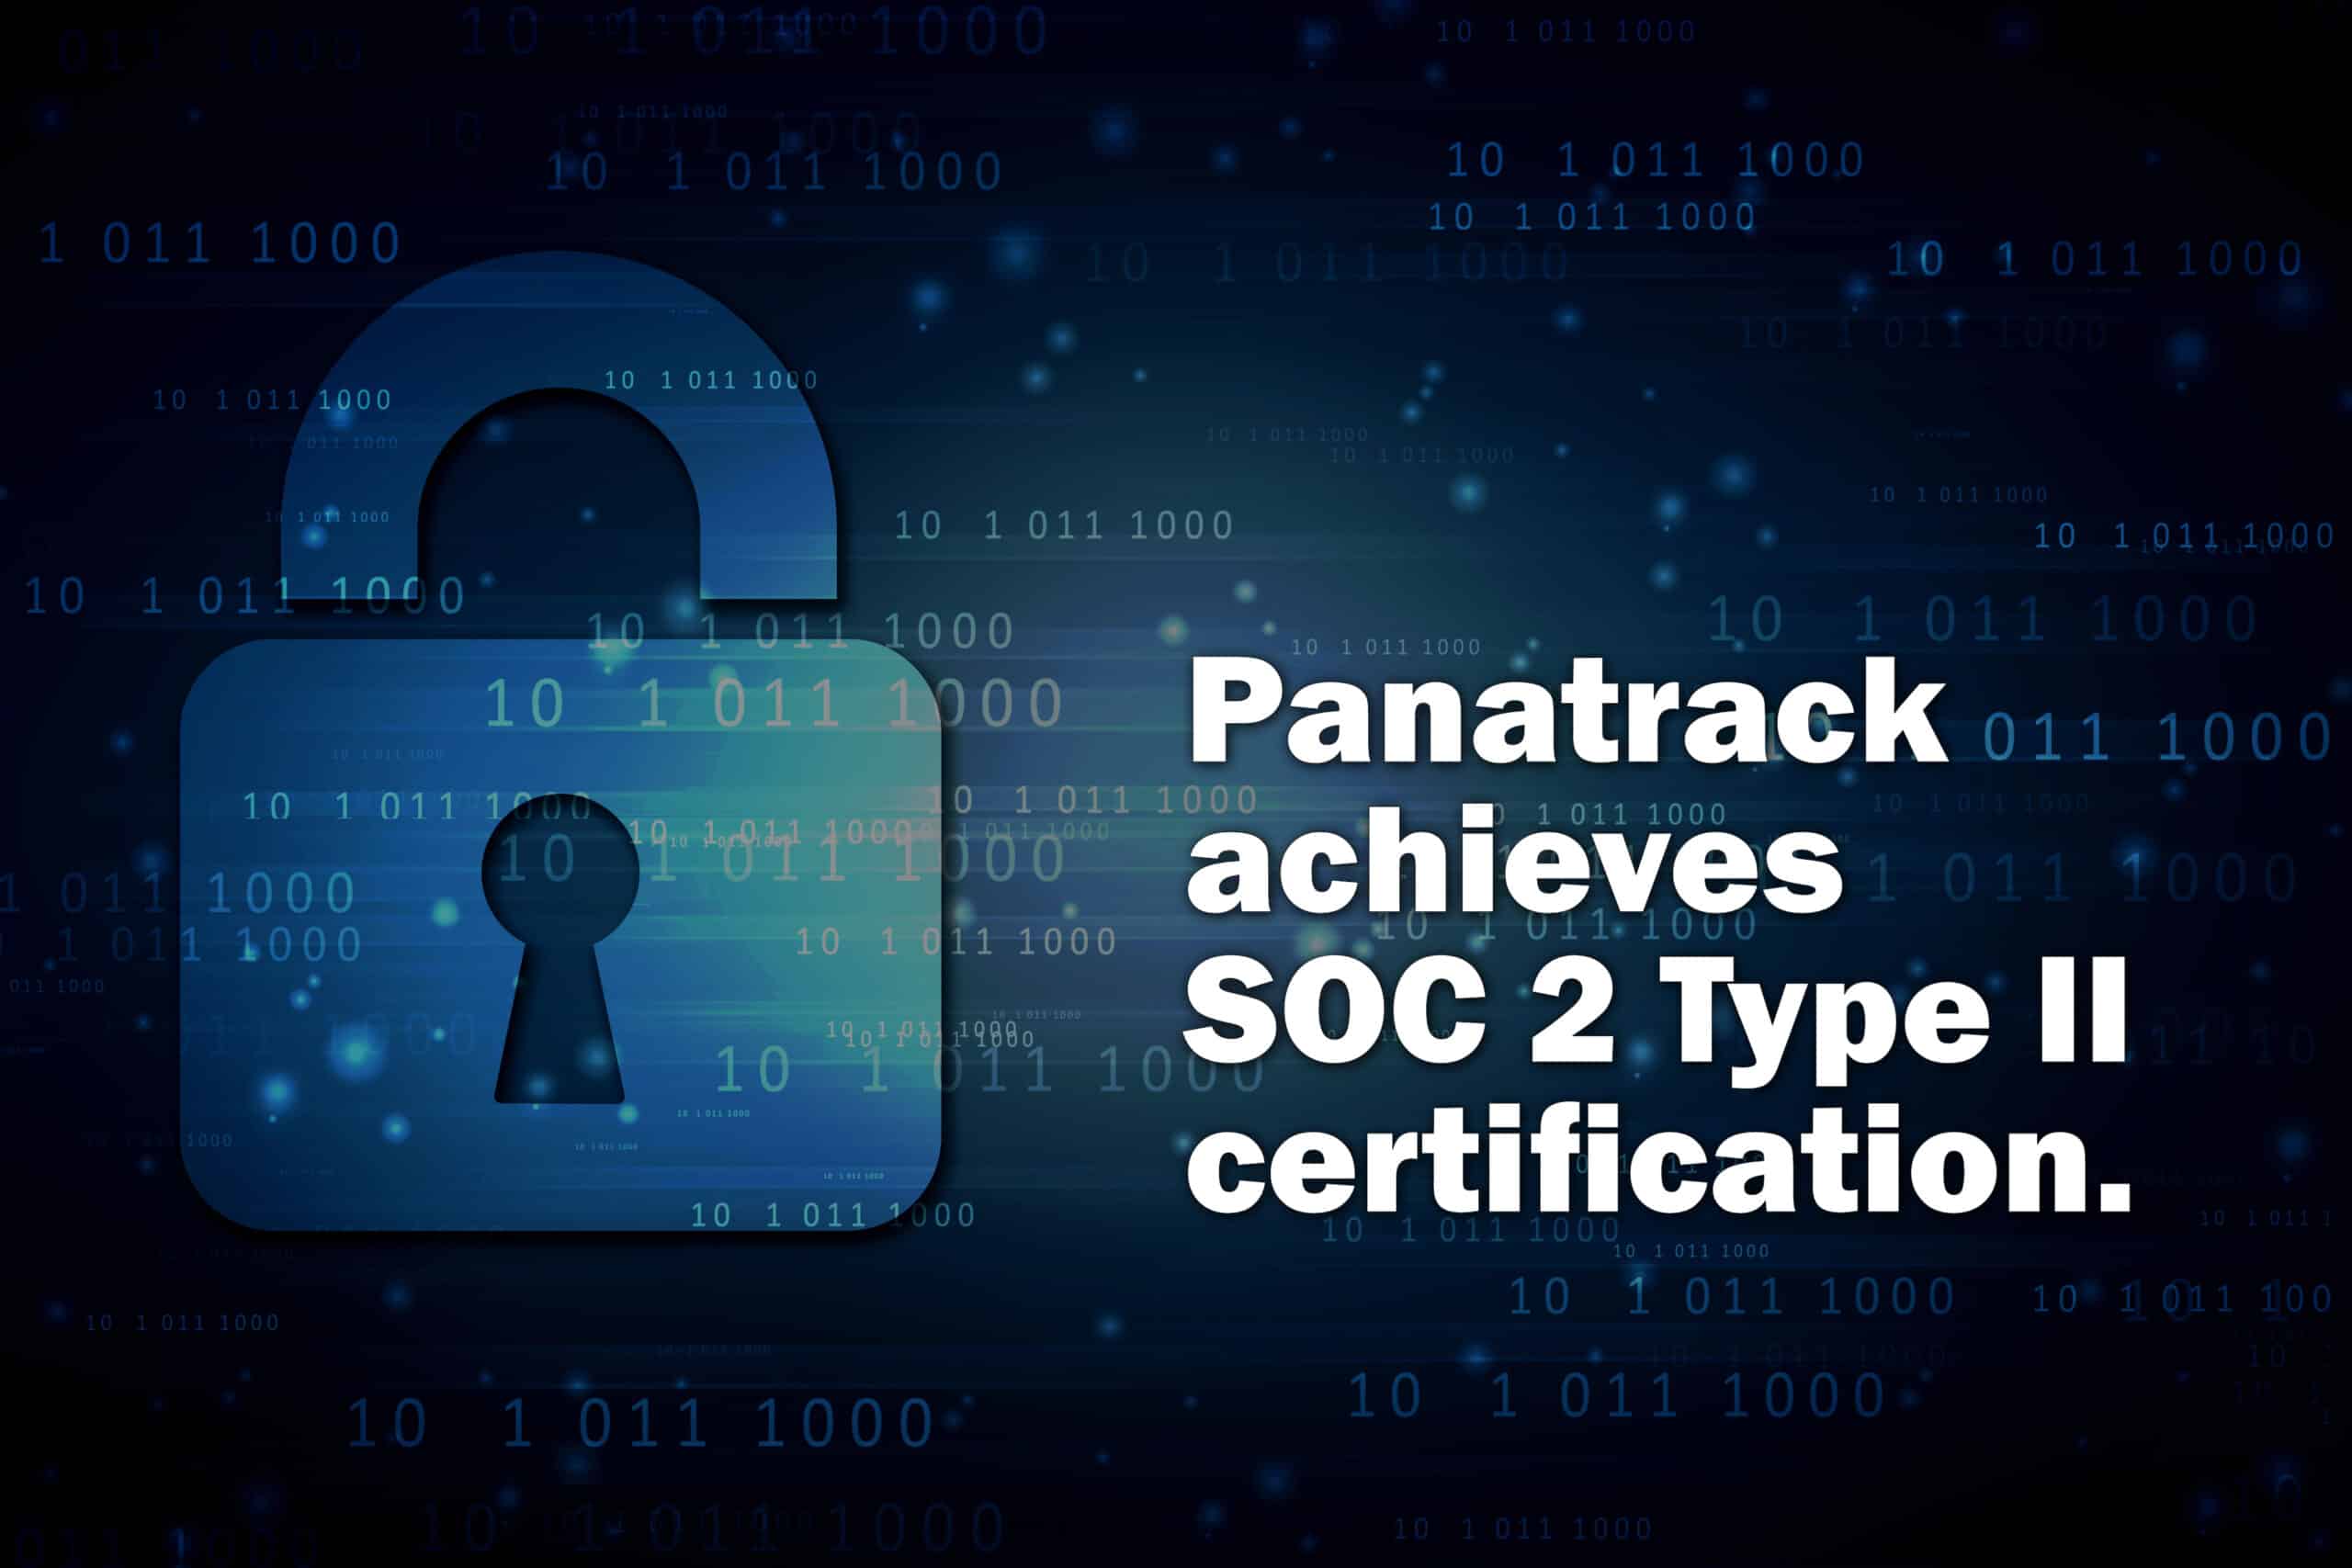 Panatrack achieves SOC 2 Type II certification